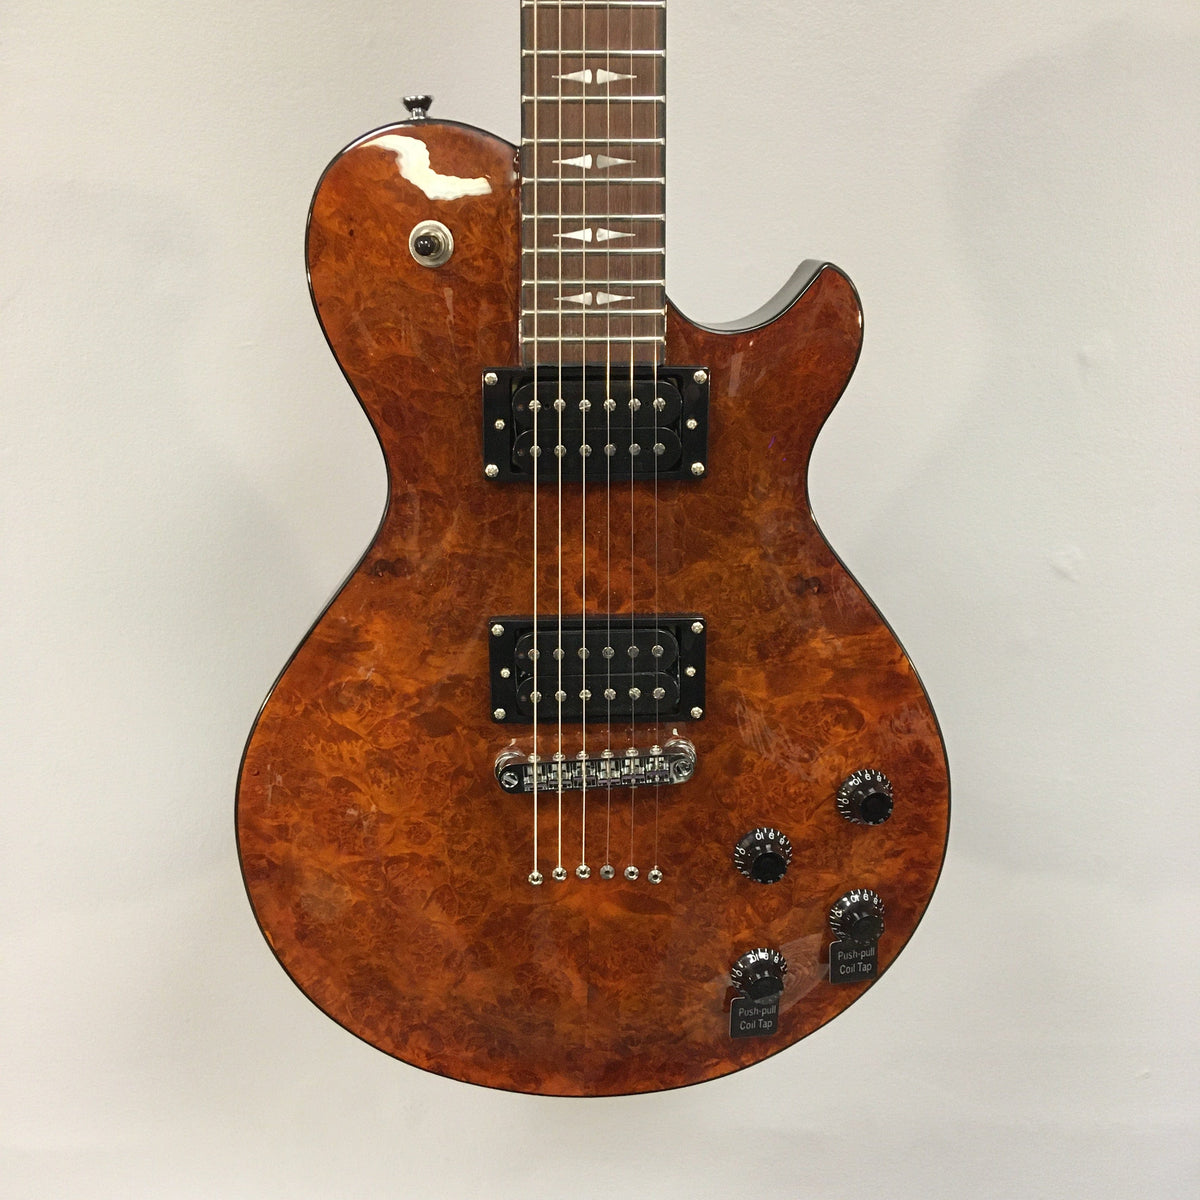 Michael Kelly Patriot Brown Burl Maple Prototype Guitars...